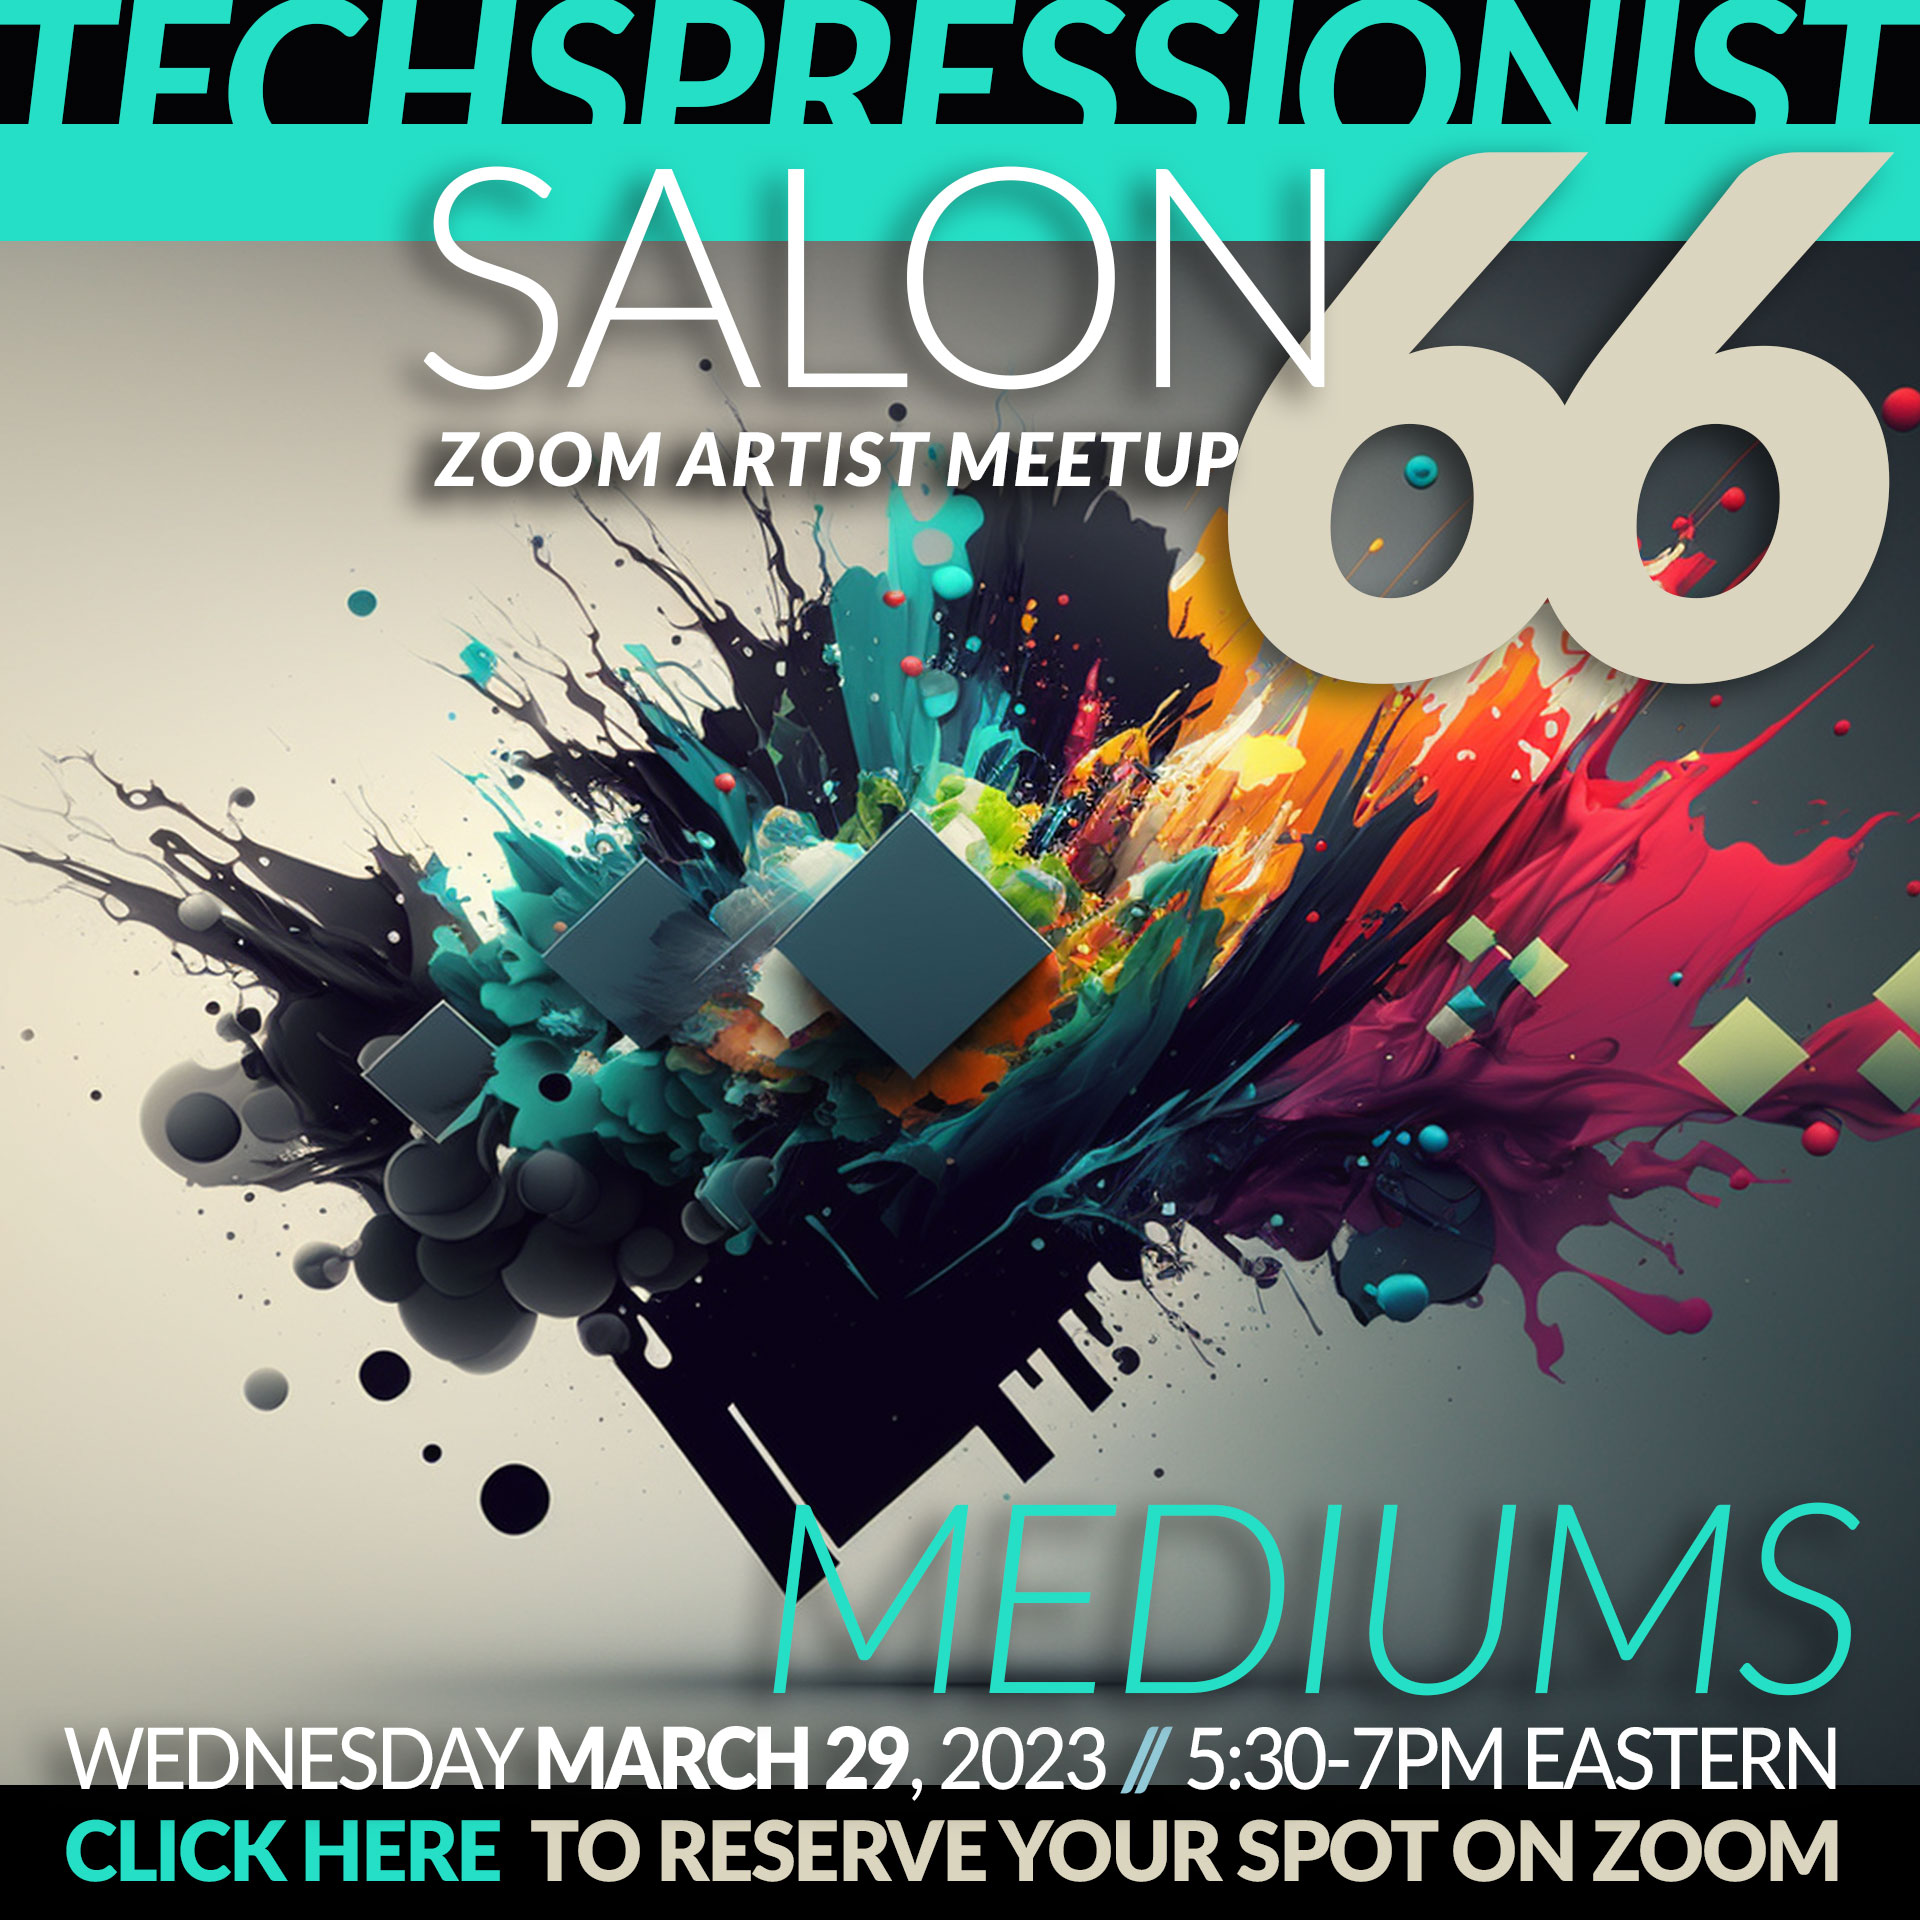 TECHSPRESSIONIST SALON 66 - MEDIUMS